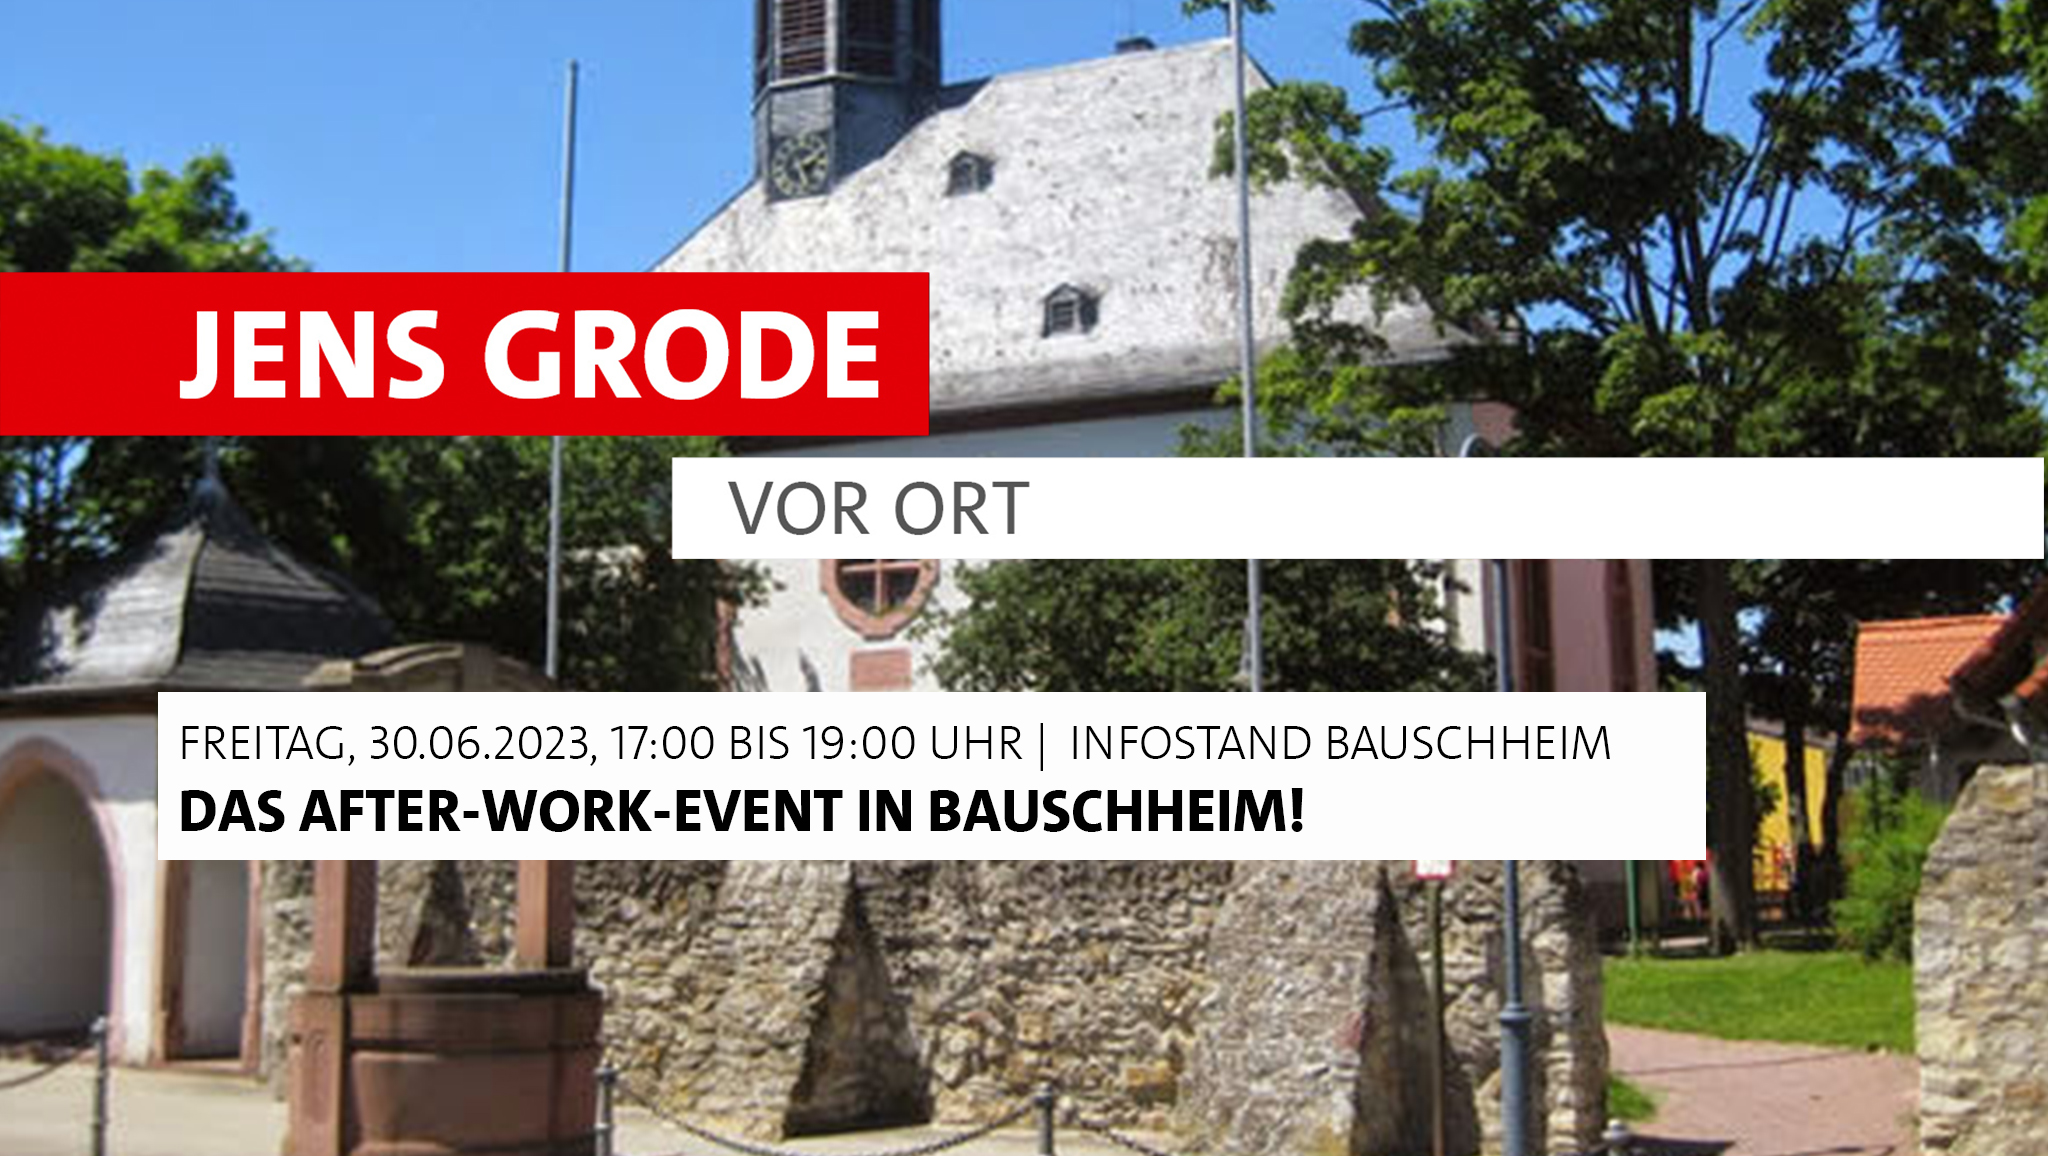 Das After-Work-Event in Bauschheim!